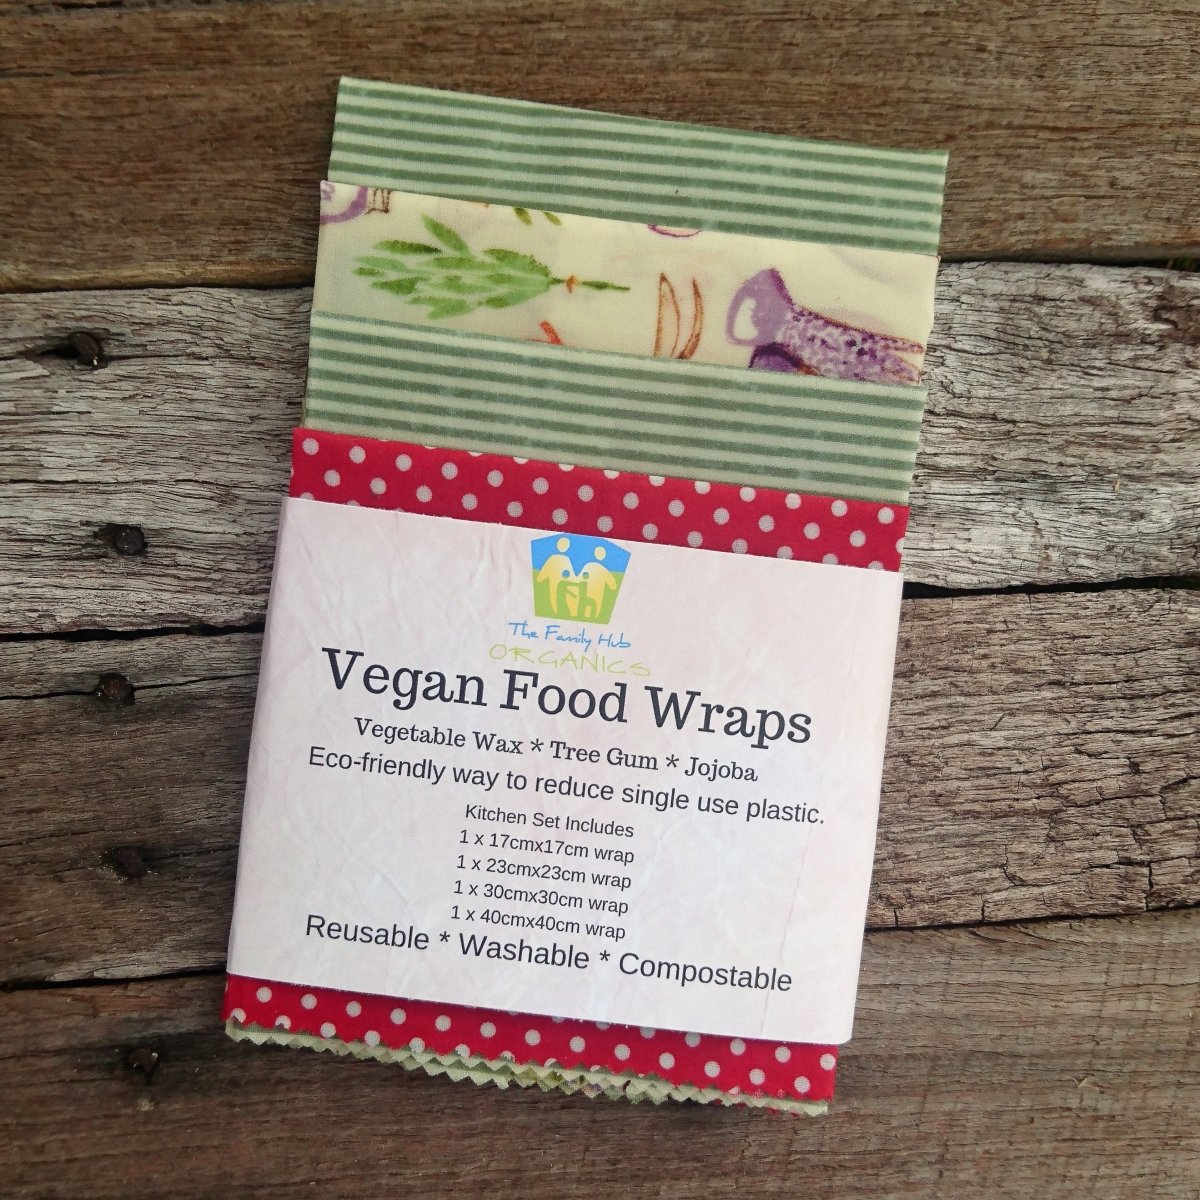 Vegan Food Wraps (Kitchen Set) from The Family Hub